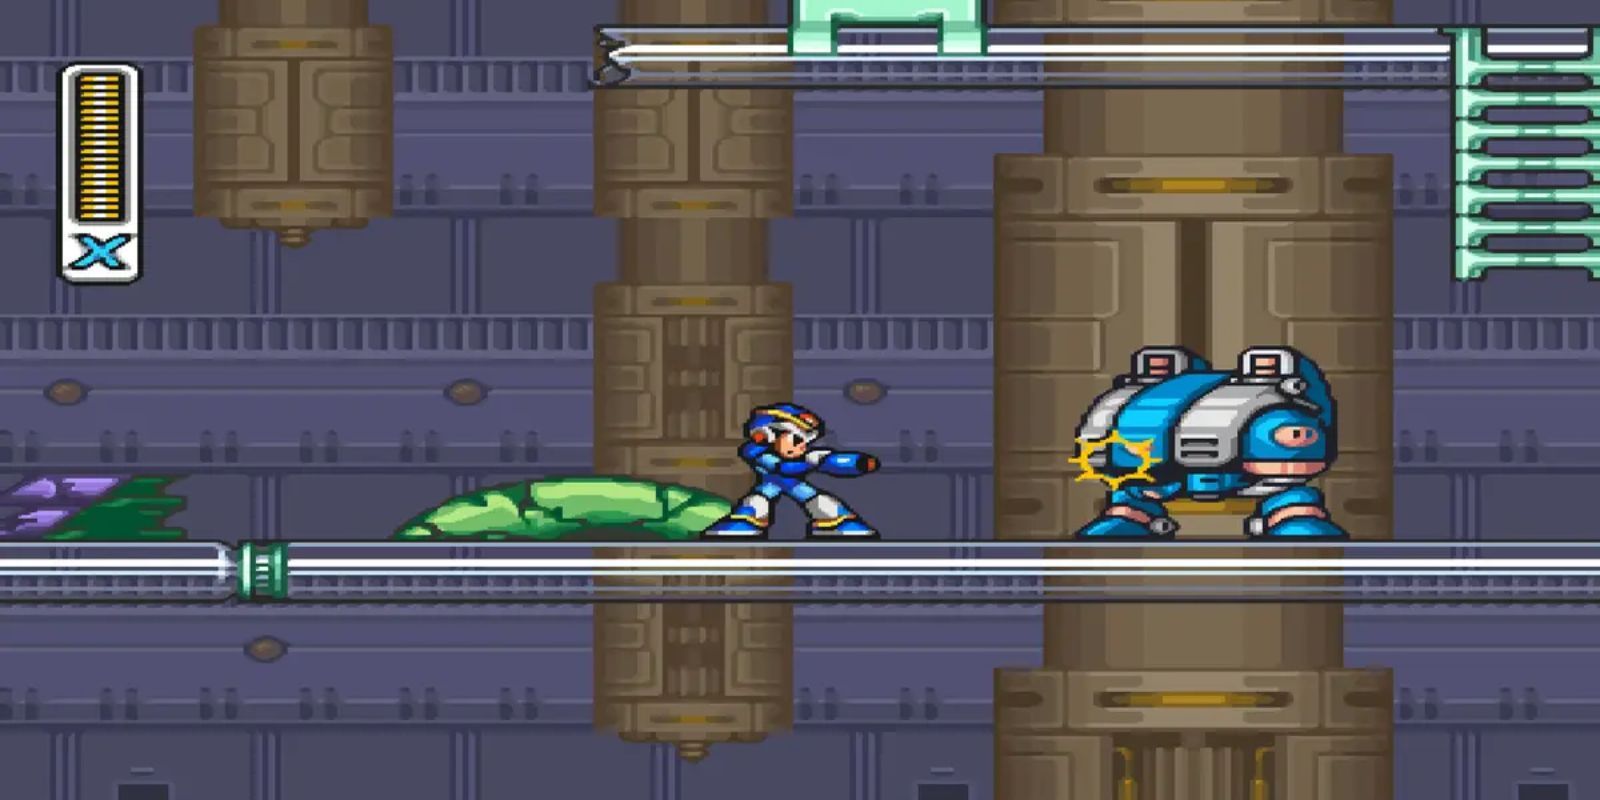 Mega Man X fighting a boss